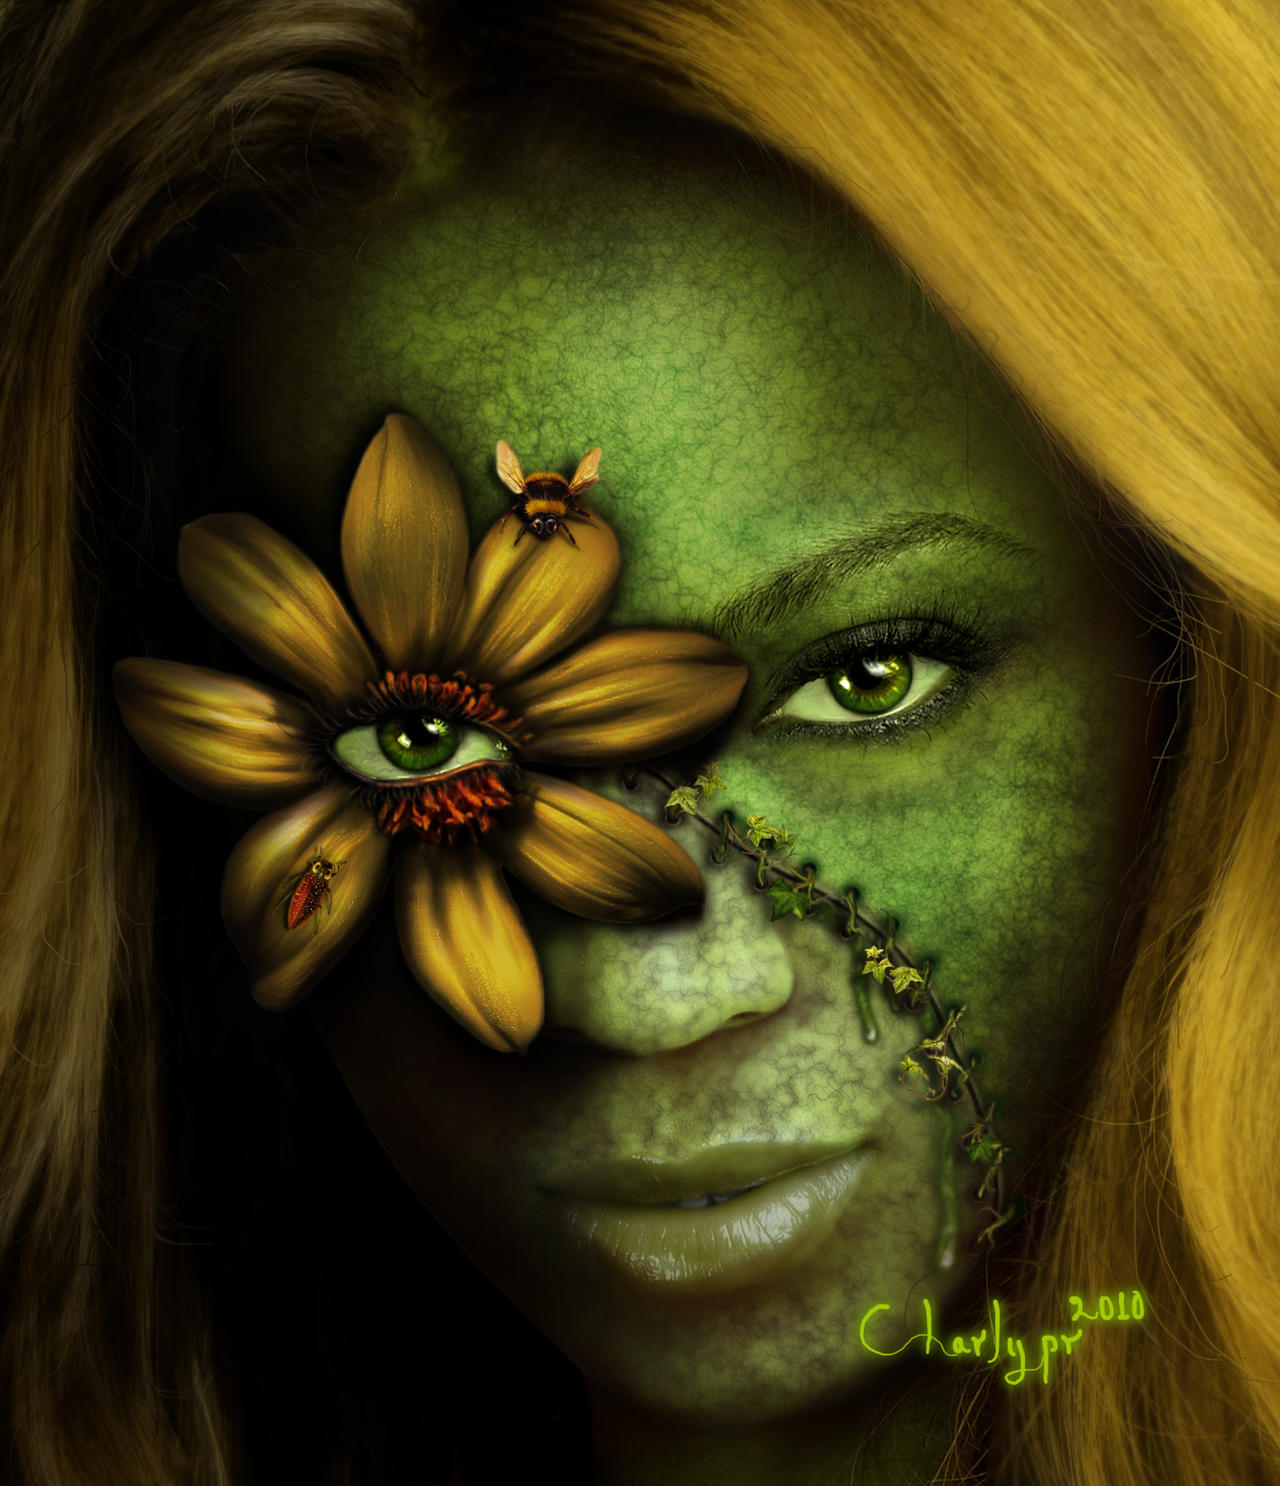 Green_Woman_by_charlypr.jpg